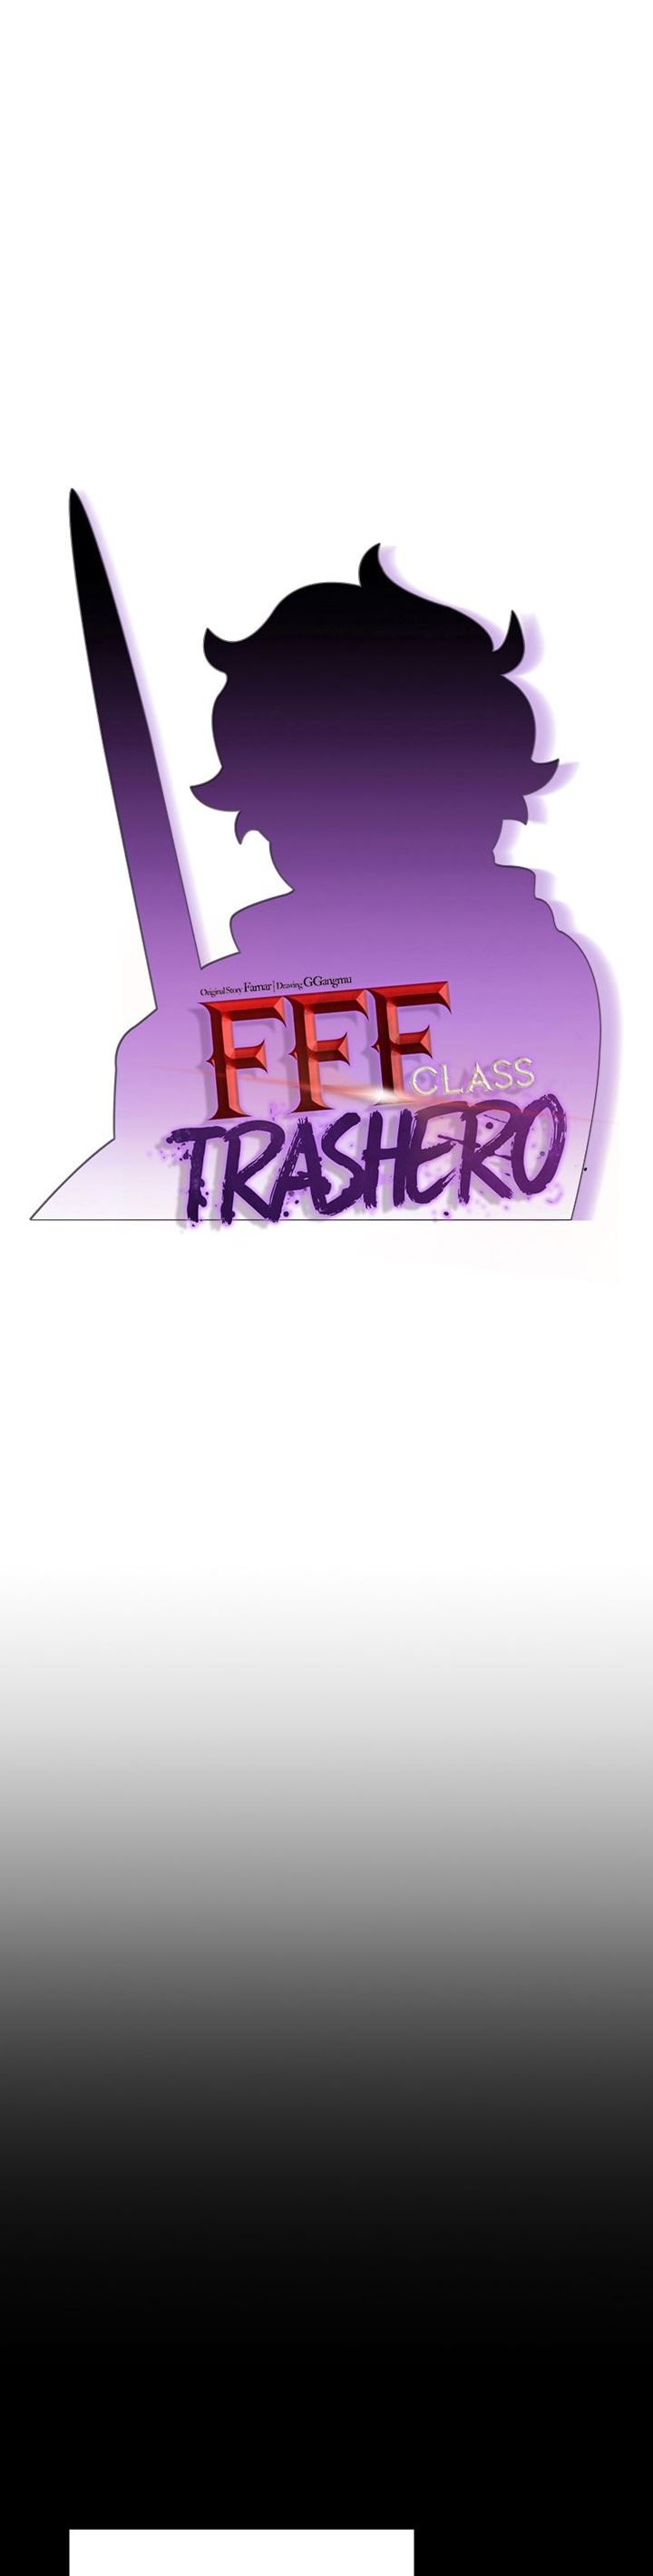 FFF-Class Trashero Chapter 111